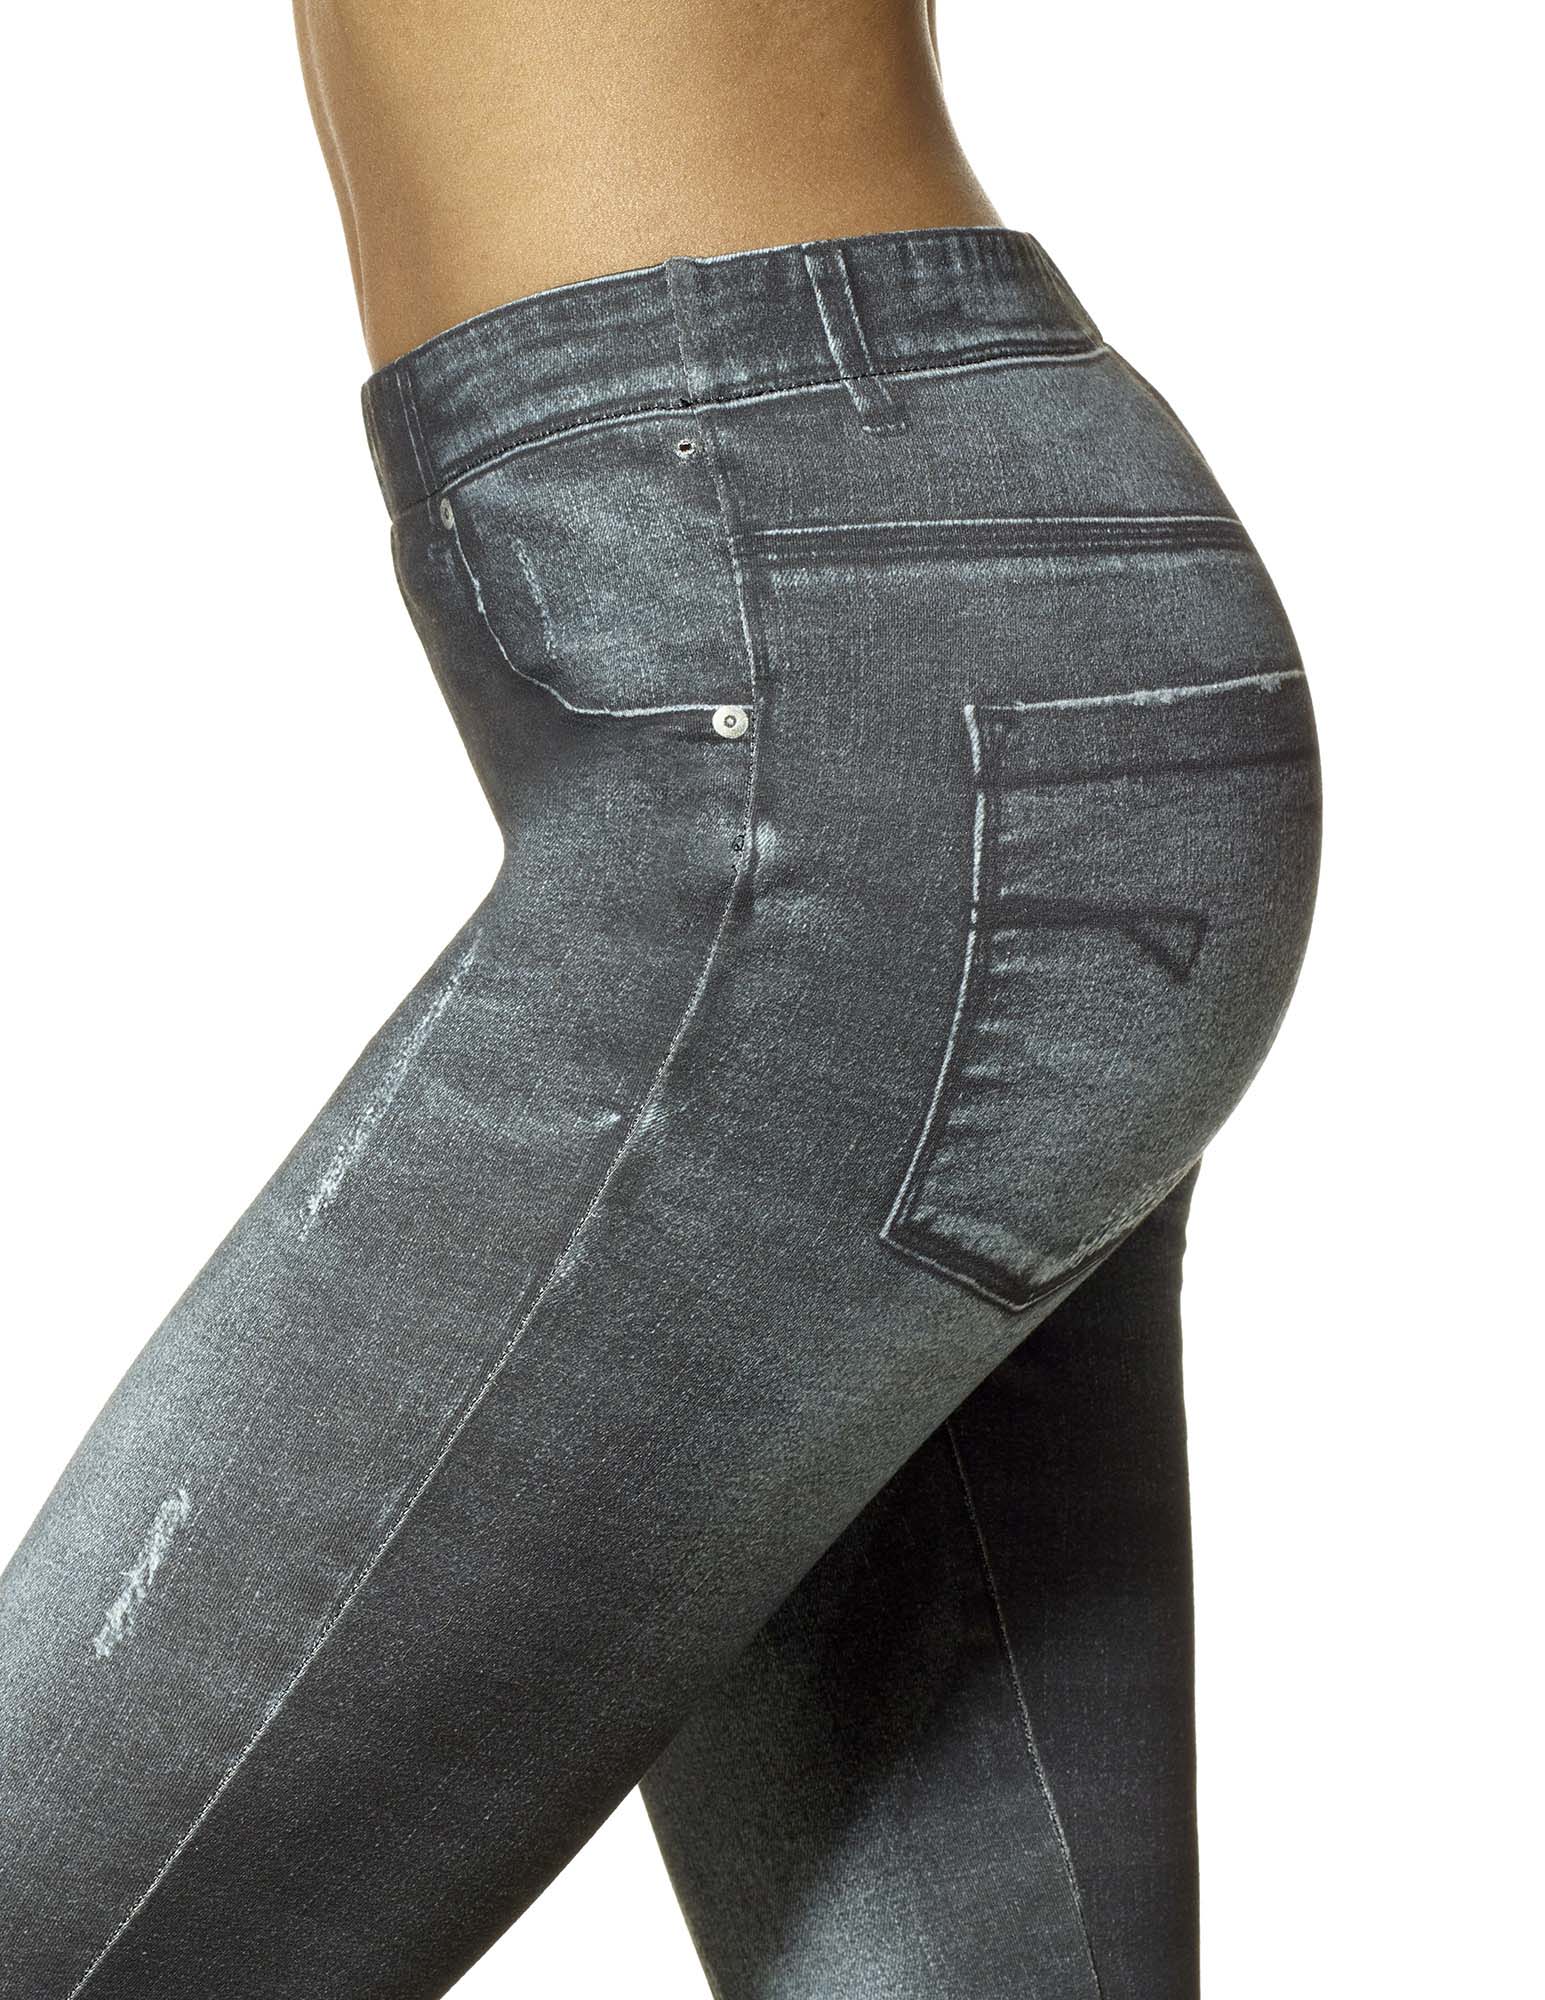 jegging femme taille normale gris pantalons jeans et leggings femme